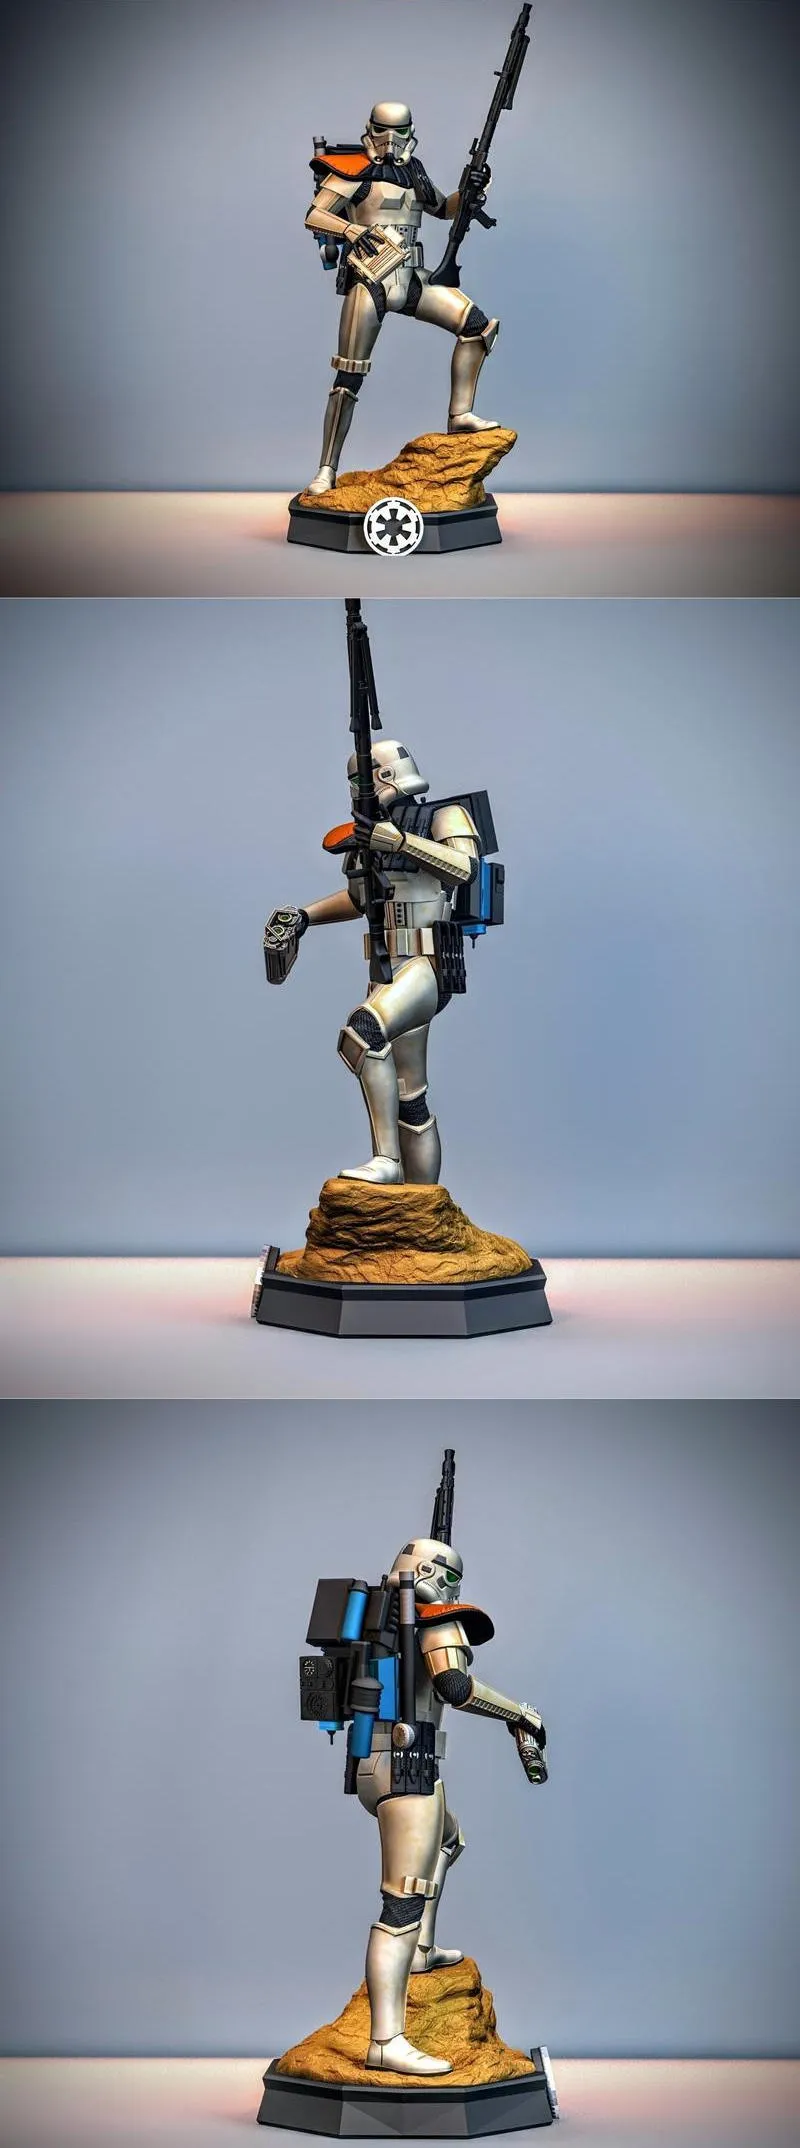 Sand trooper - Star Wars